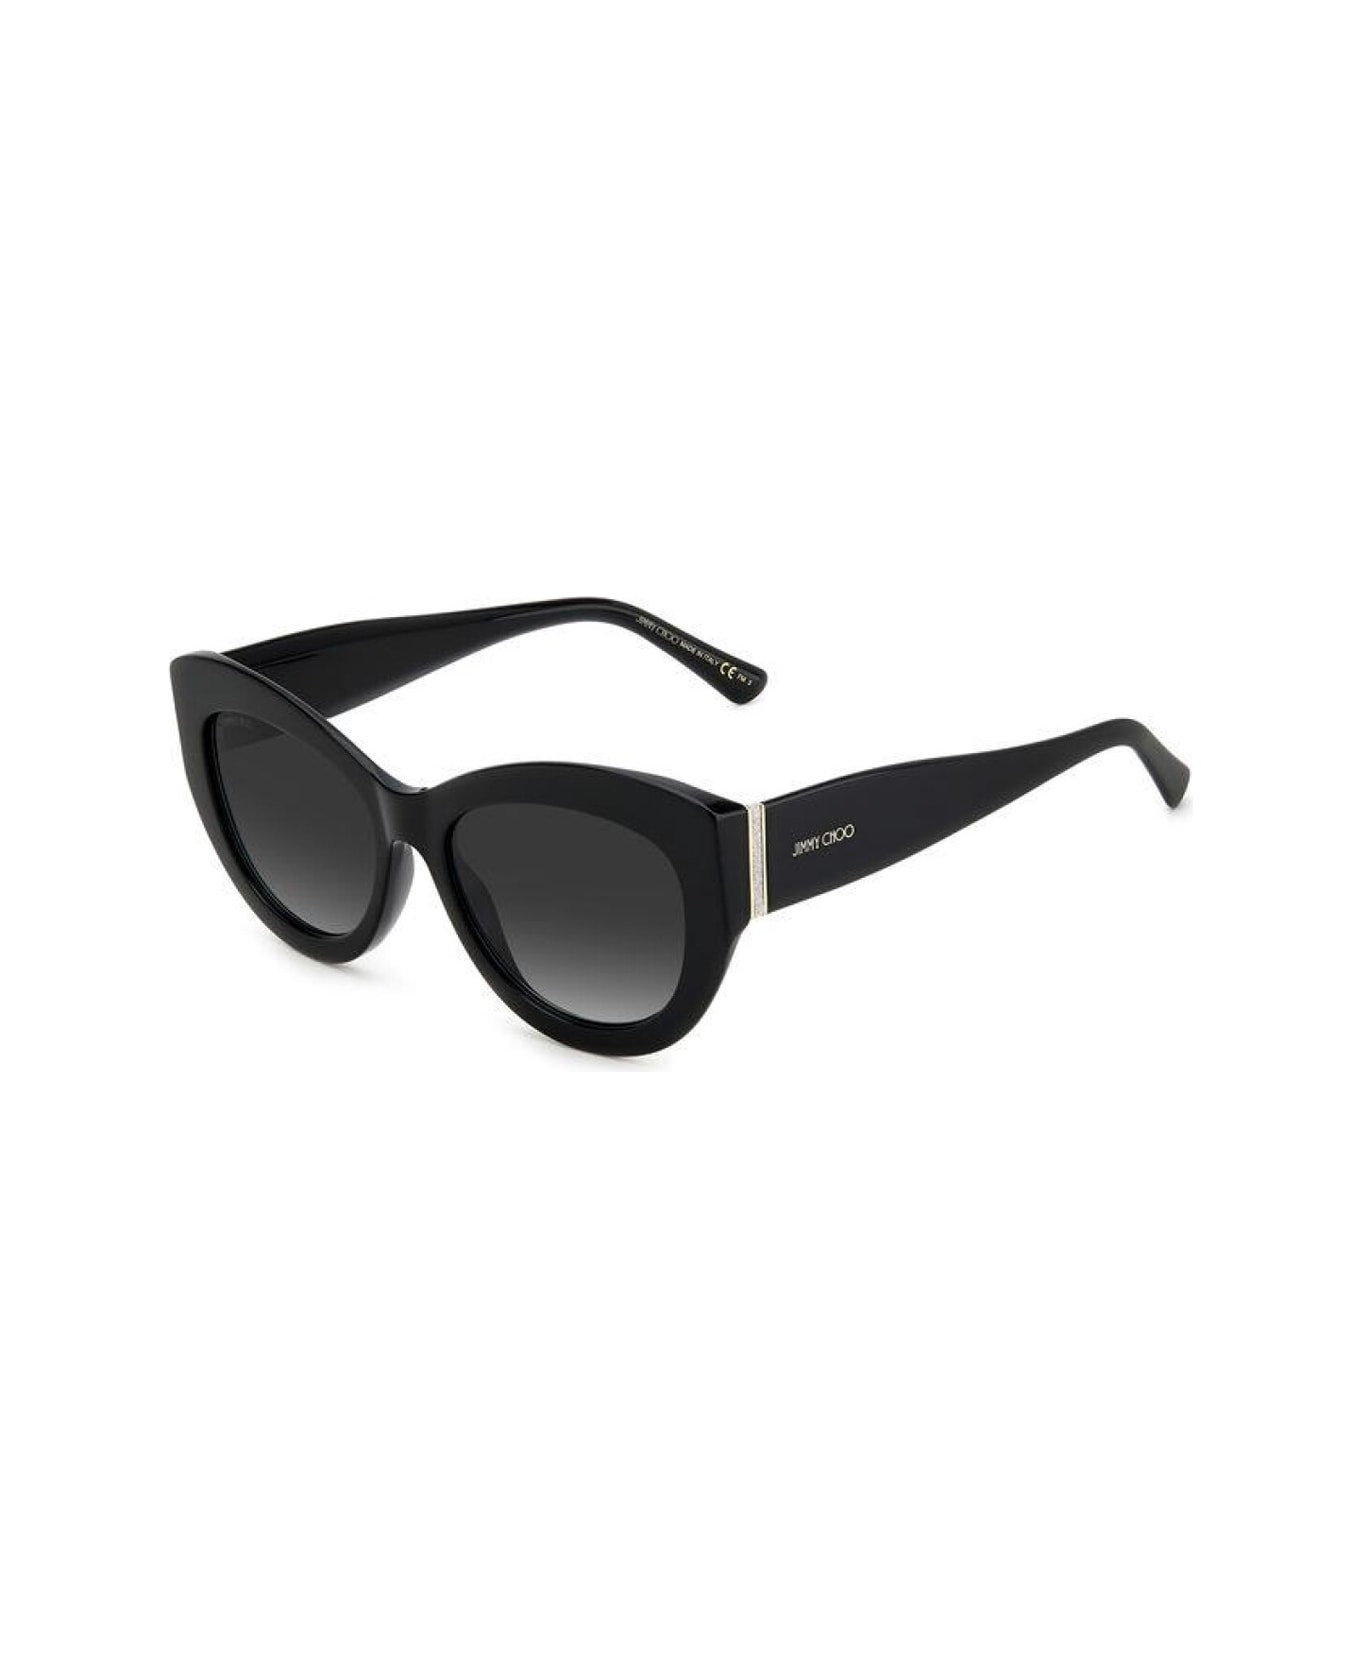 Jimmy Choo Eyewear Jc Xena/s 807/9o Sunglasses - Nero サングラス